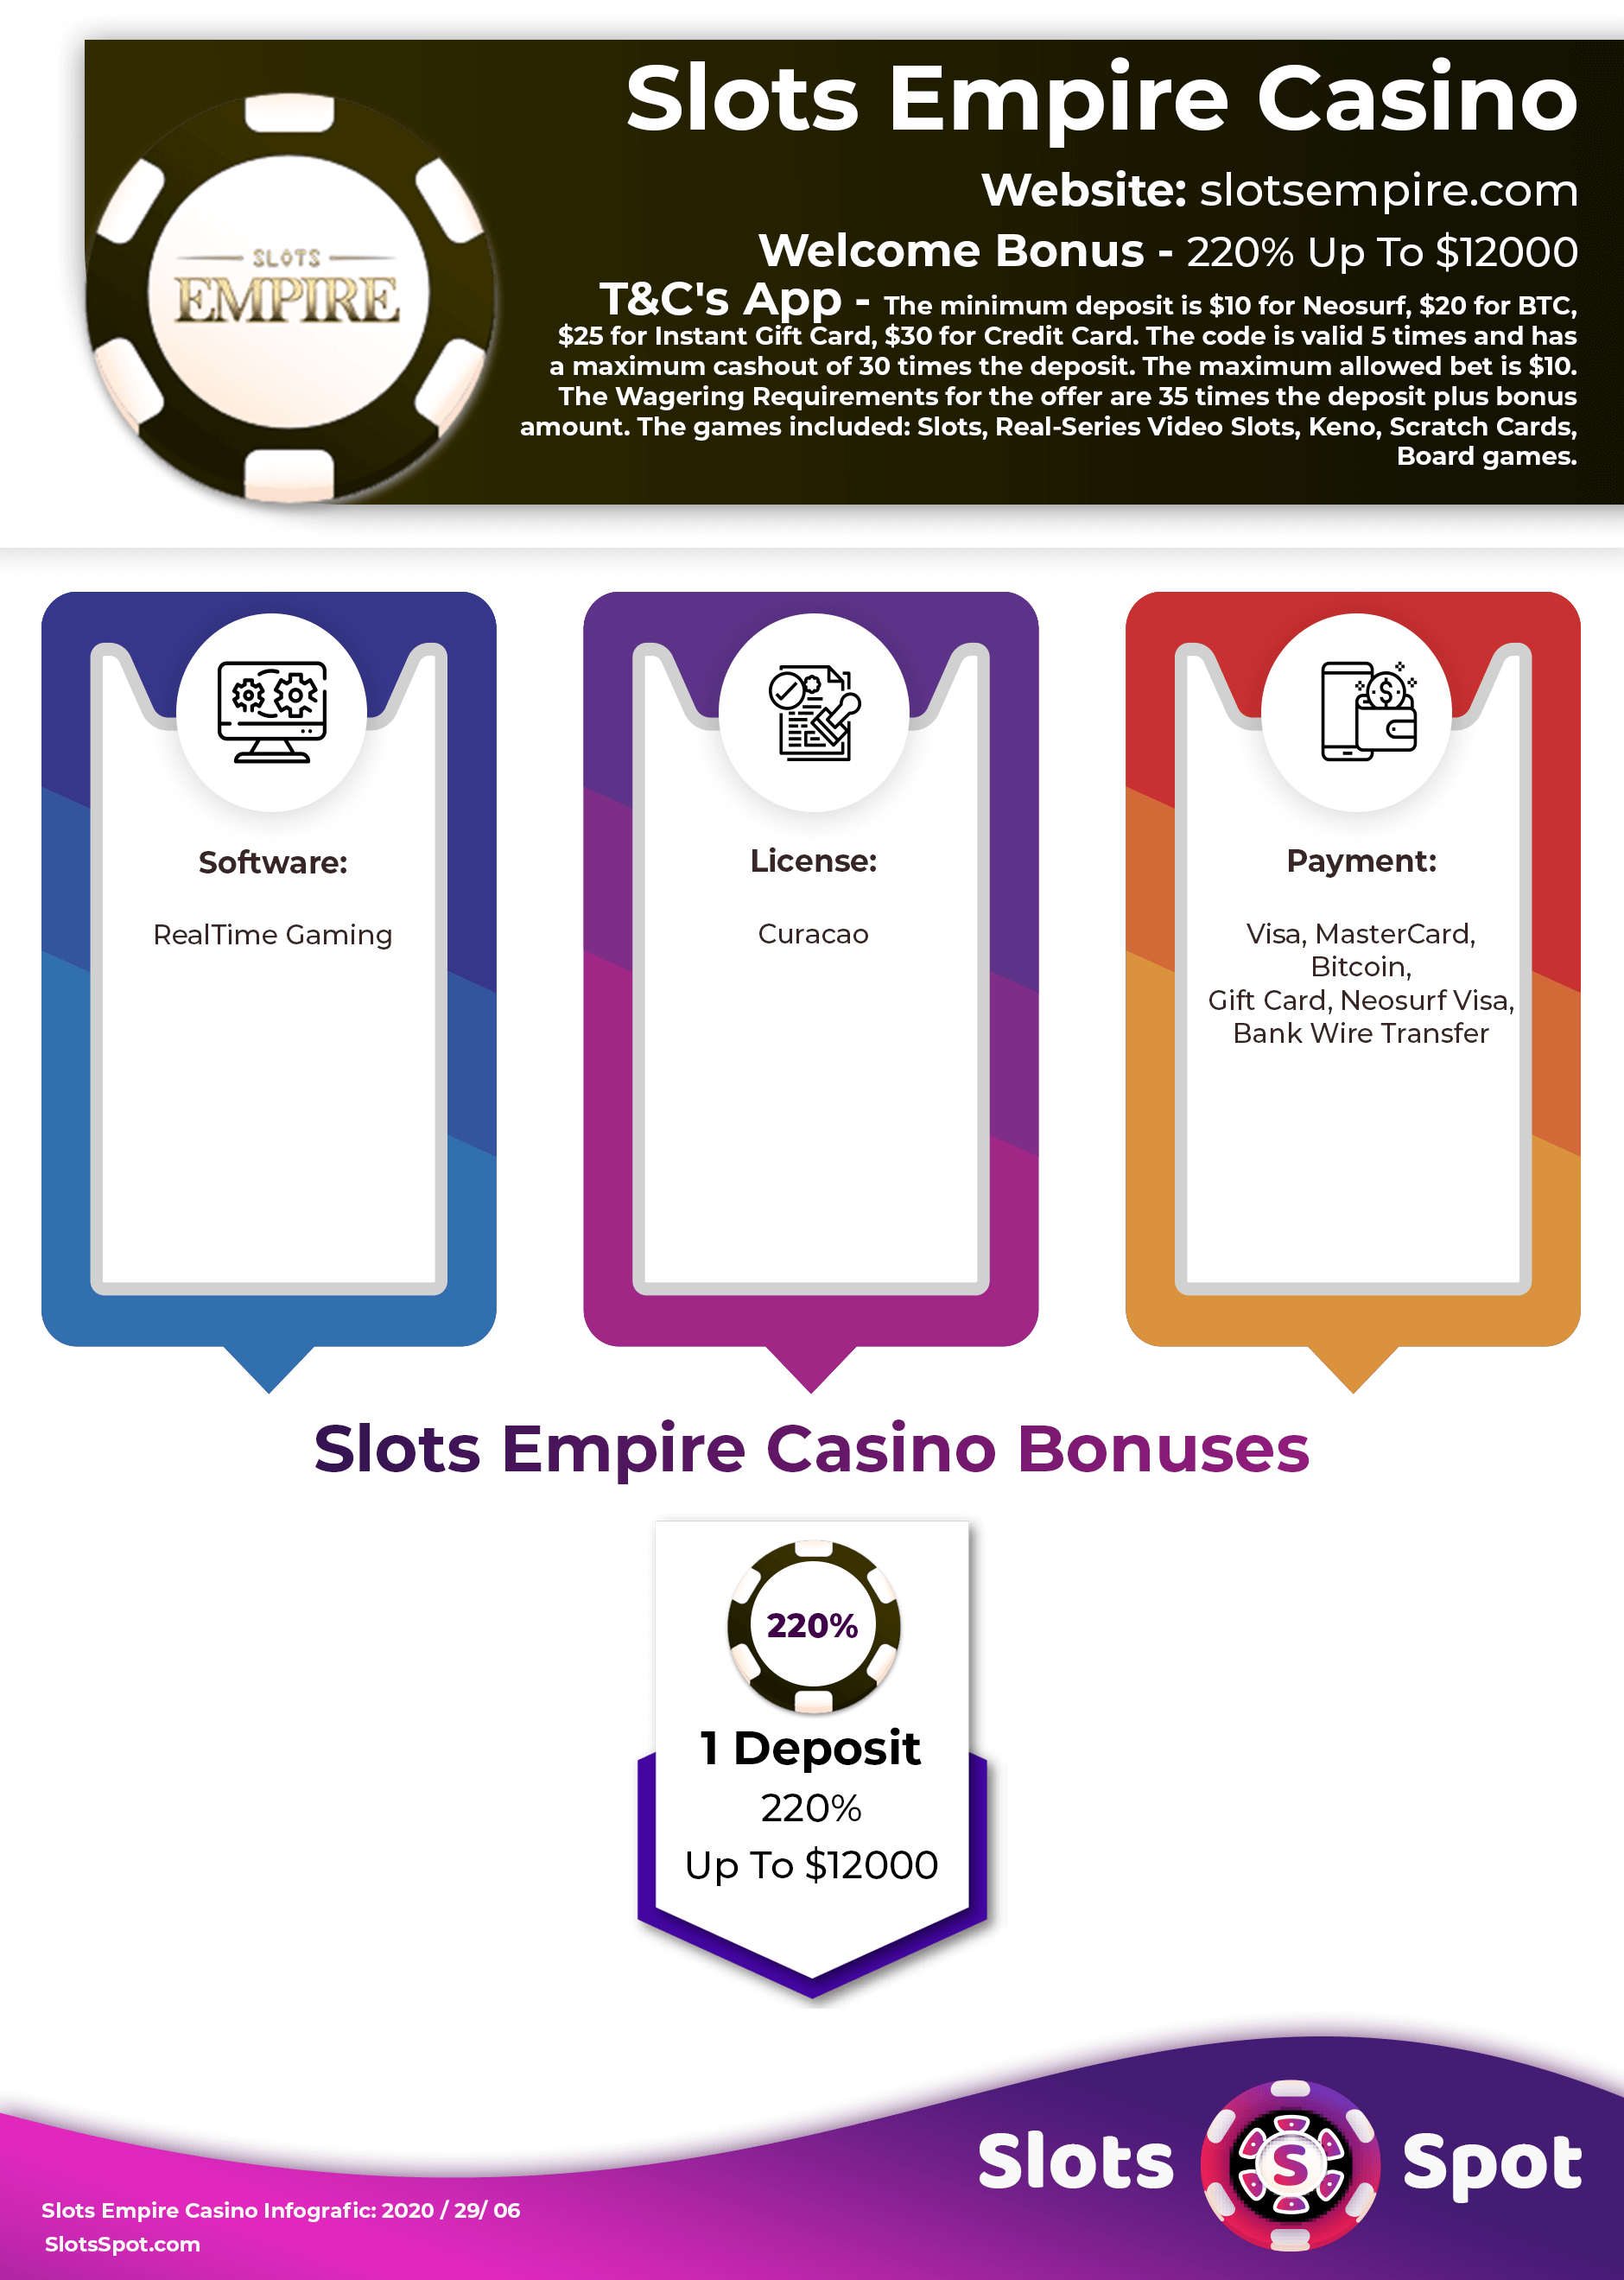 Slots empire no deposit bonus 2020 2021